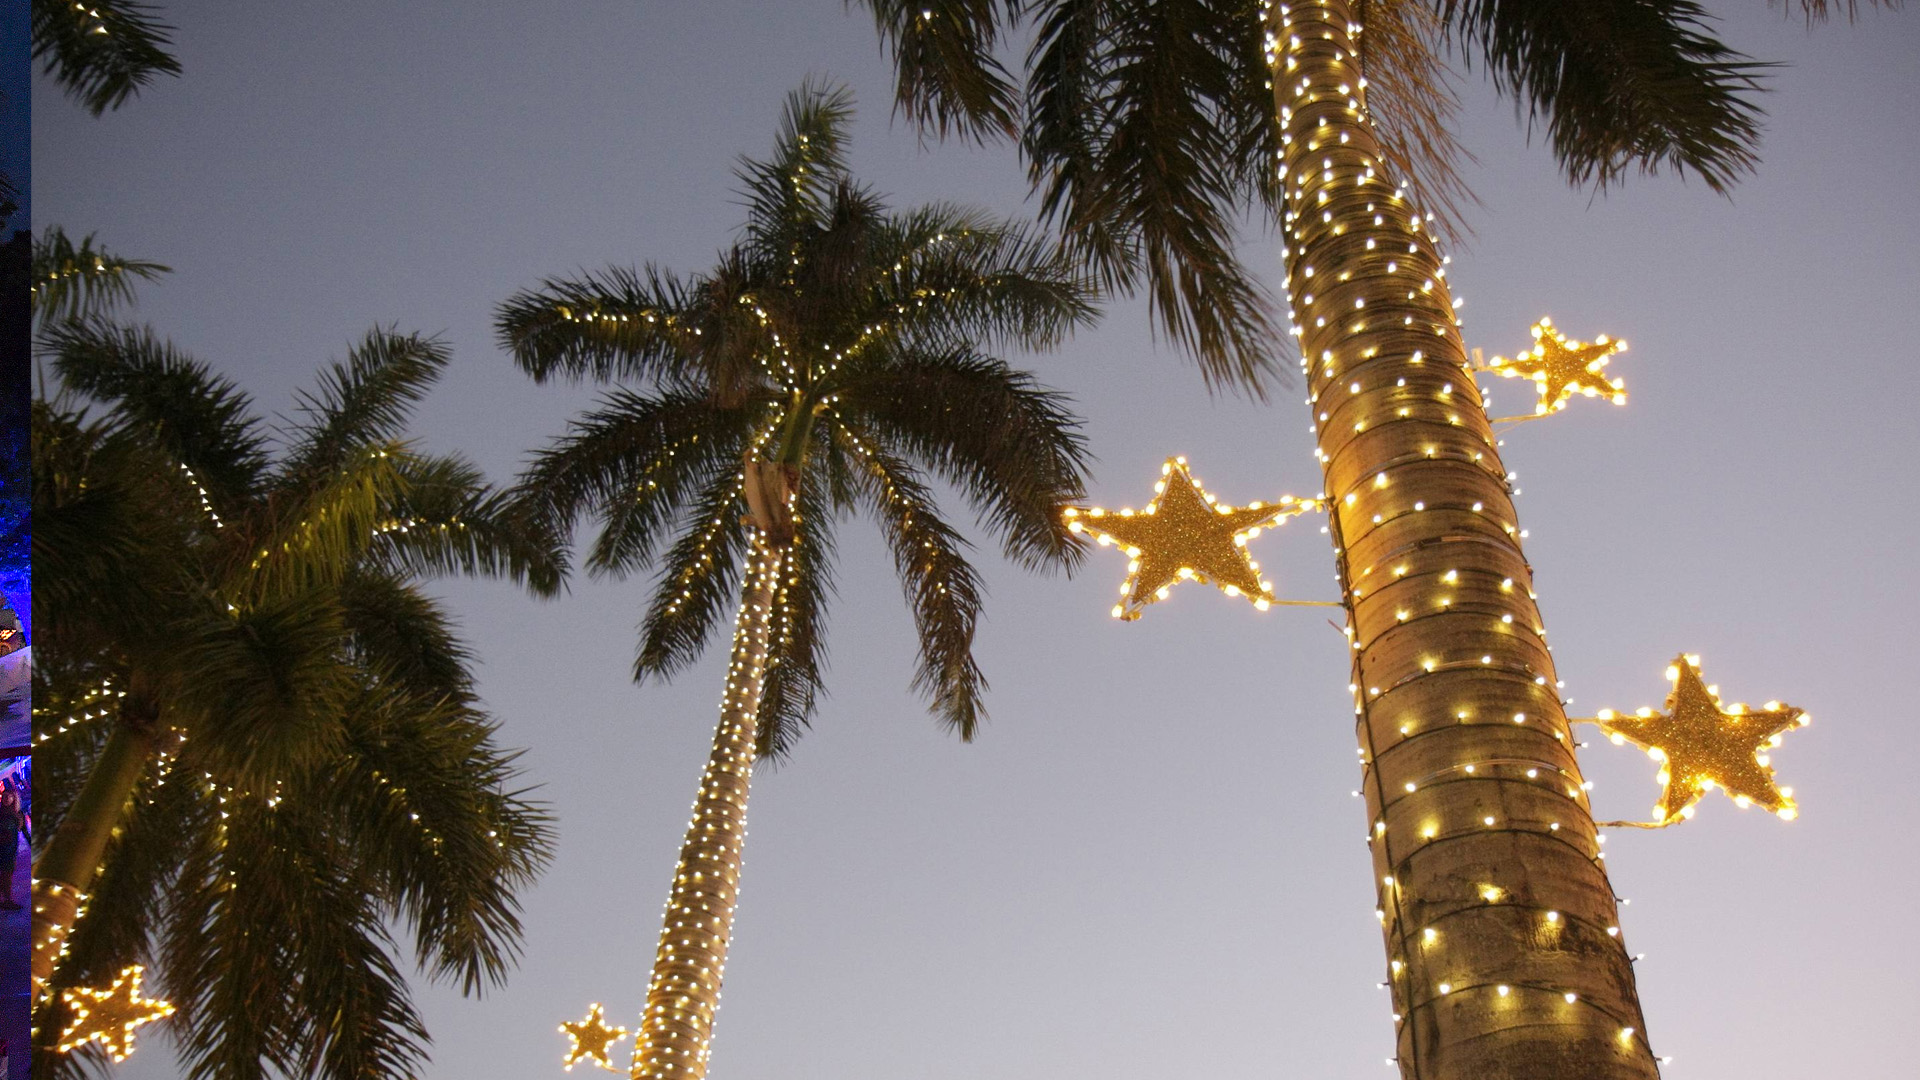 Bal Harbour Shops – Christmas Tree & Lights